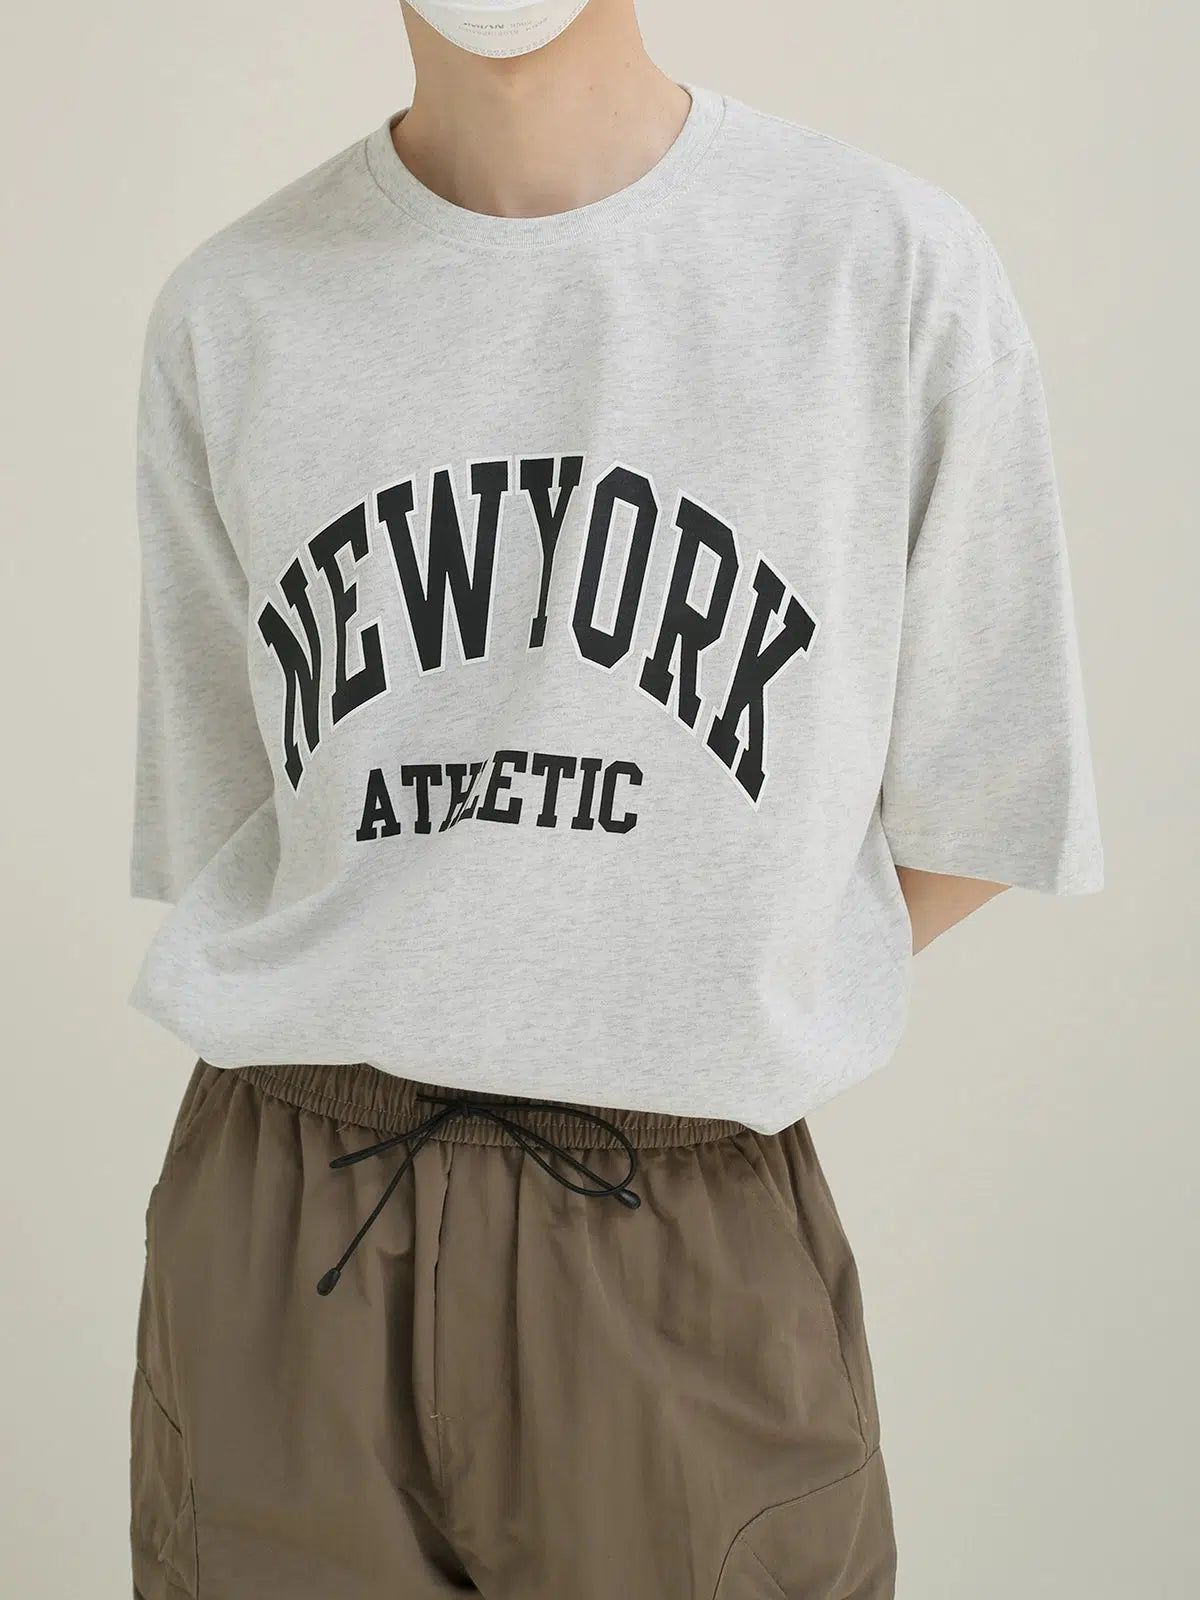 Zhou New York Athletic Text T-Shirt-korean-fashion-T-Shirt-Zhou's Closet-OH Garments